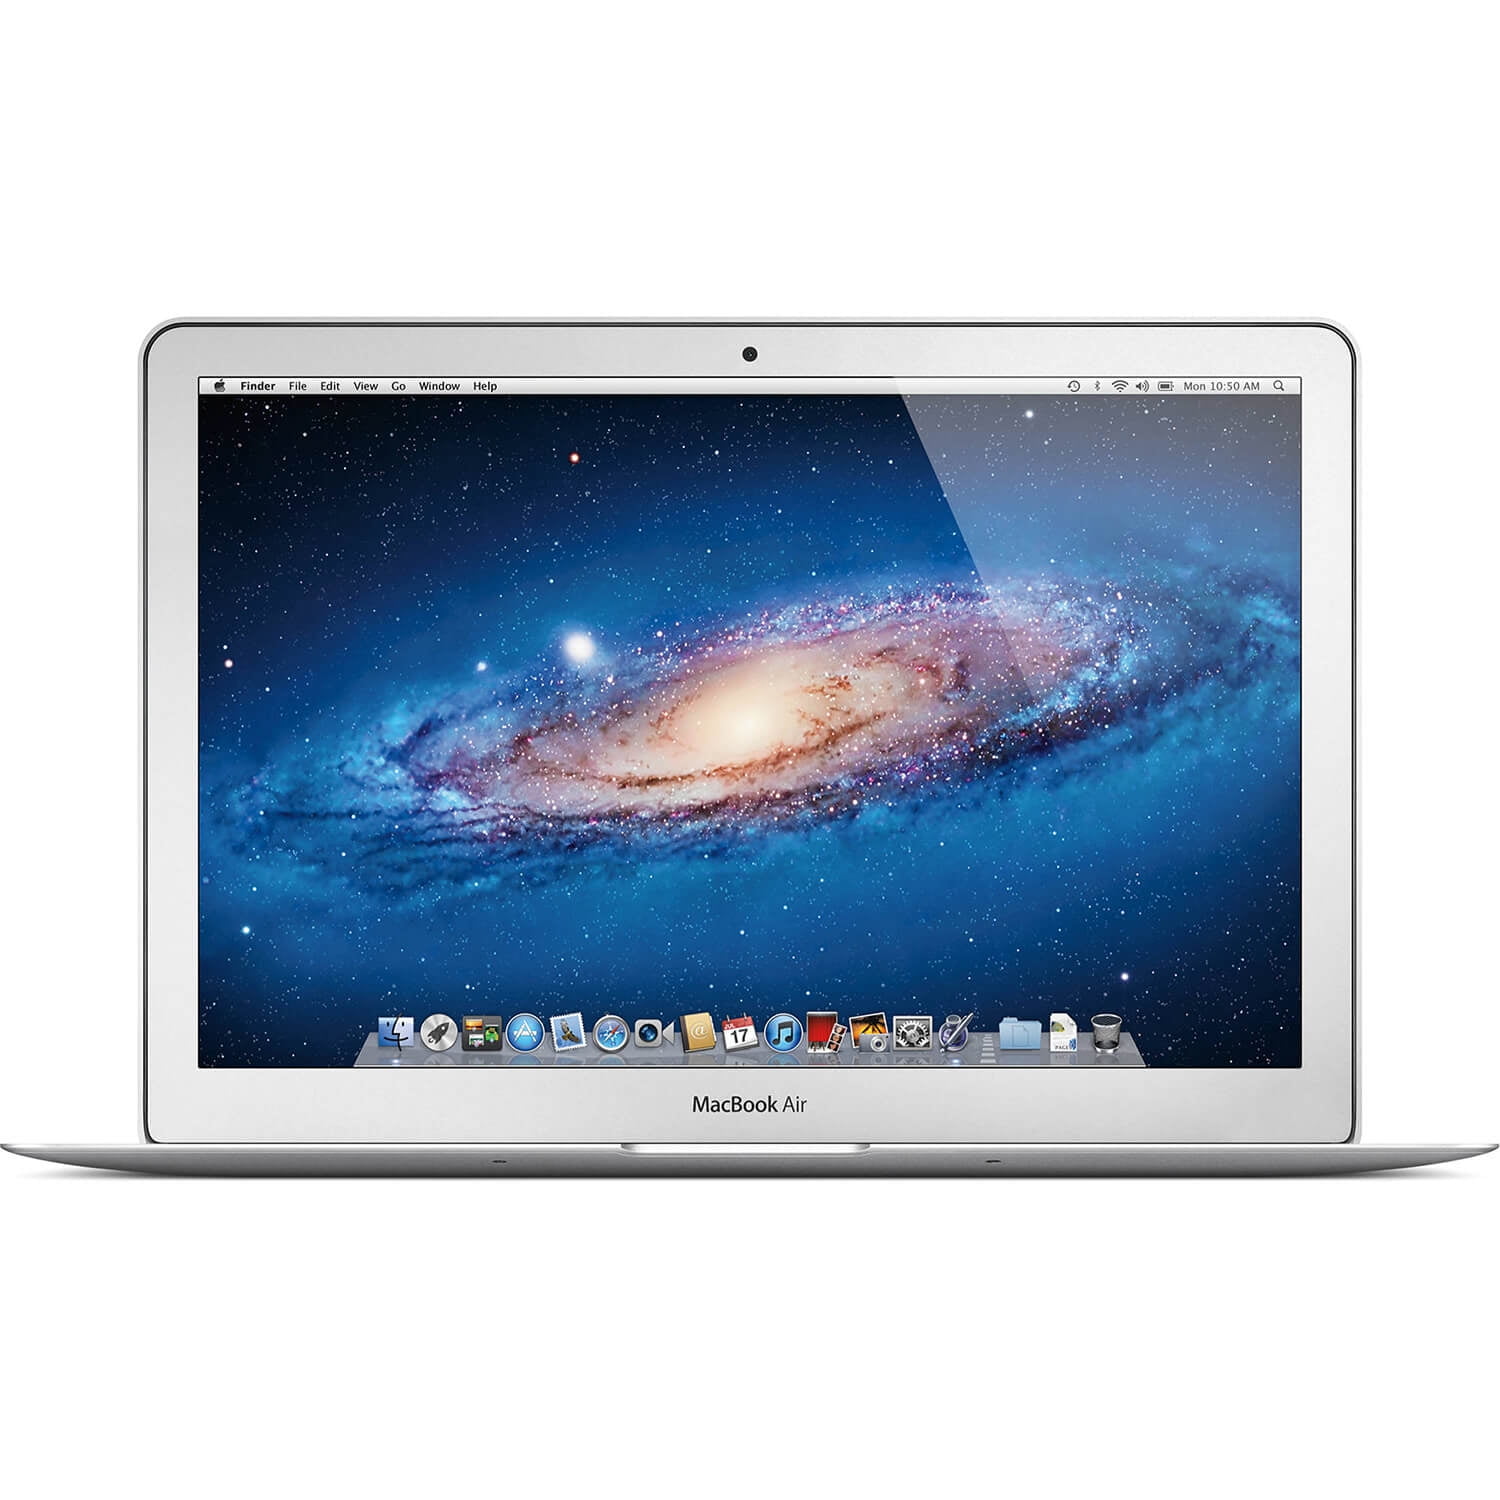 Refurbished Apple 13.3" MacBook Air Laptop, 1.8GHz Intel Core i5-3427U, 4GB RAM, Mac OS, 128GB SSD - Silver